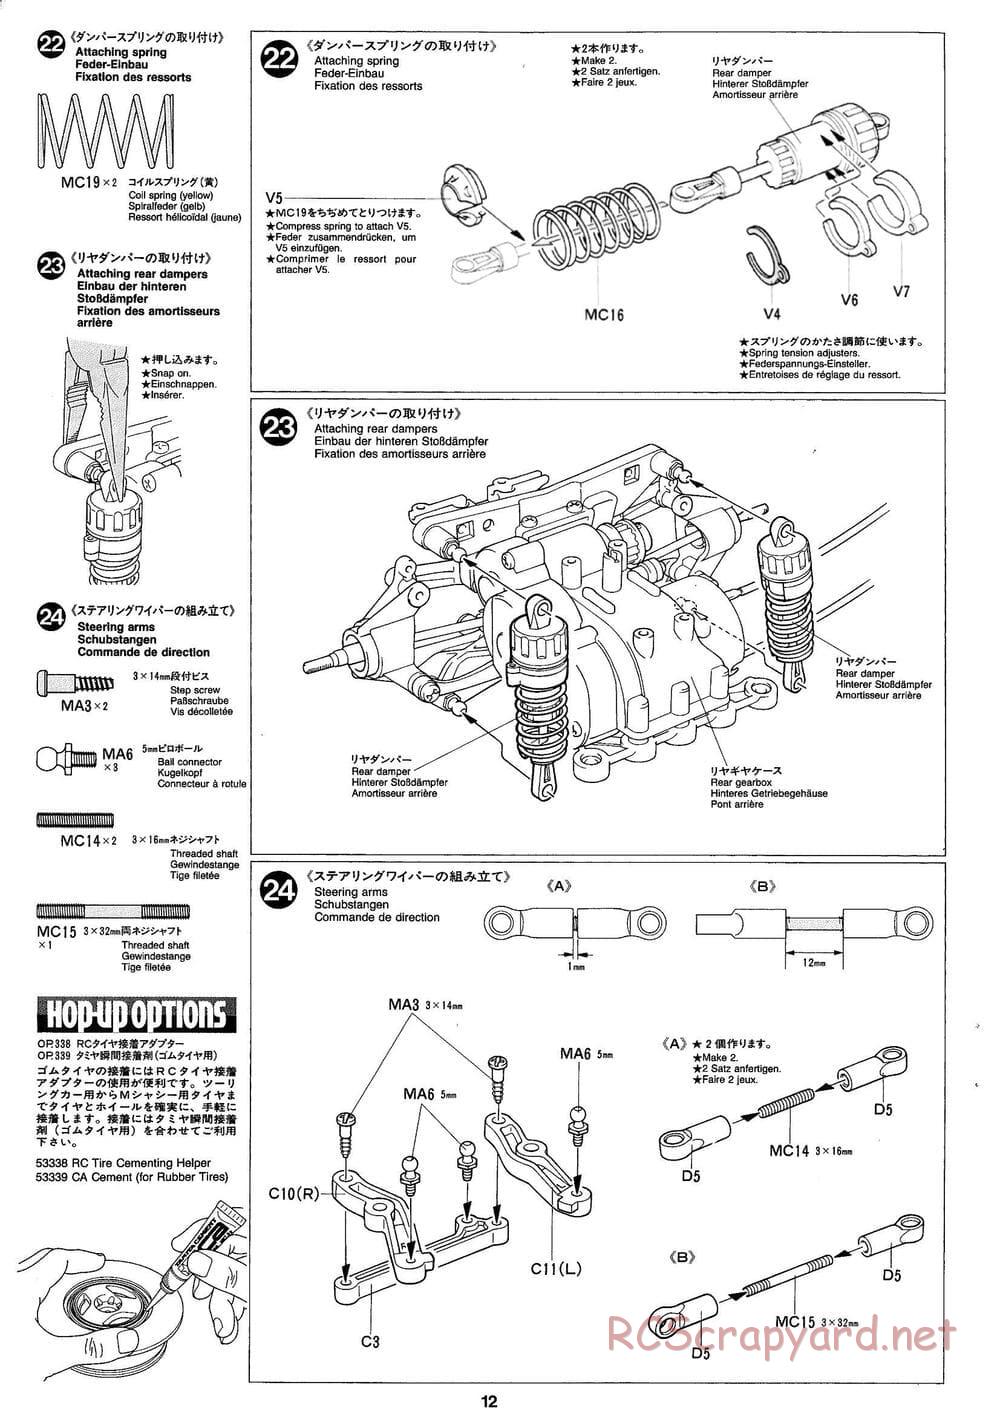 Tamiya - Mobil 1 NSX - TA-03R Chassis - Manual - Page 12